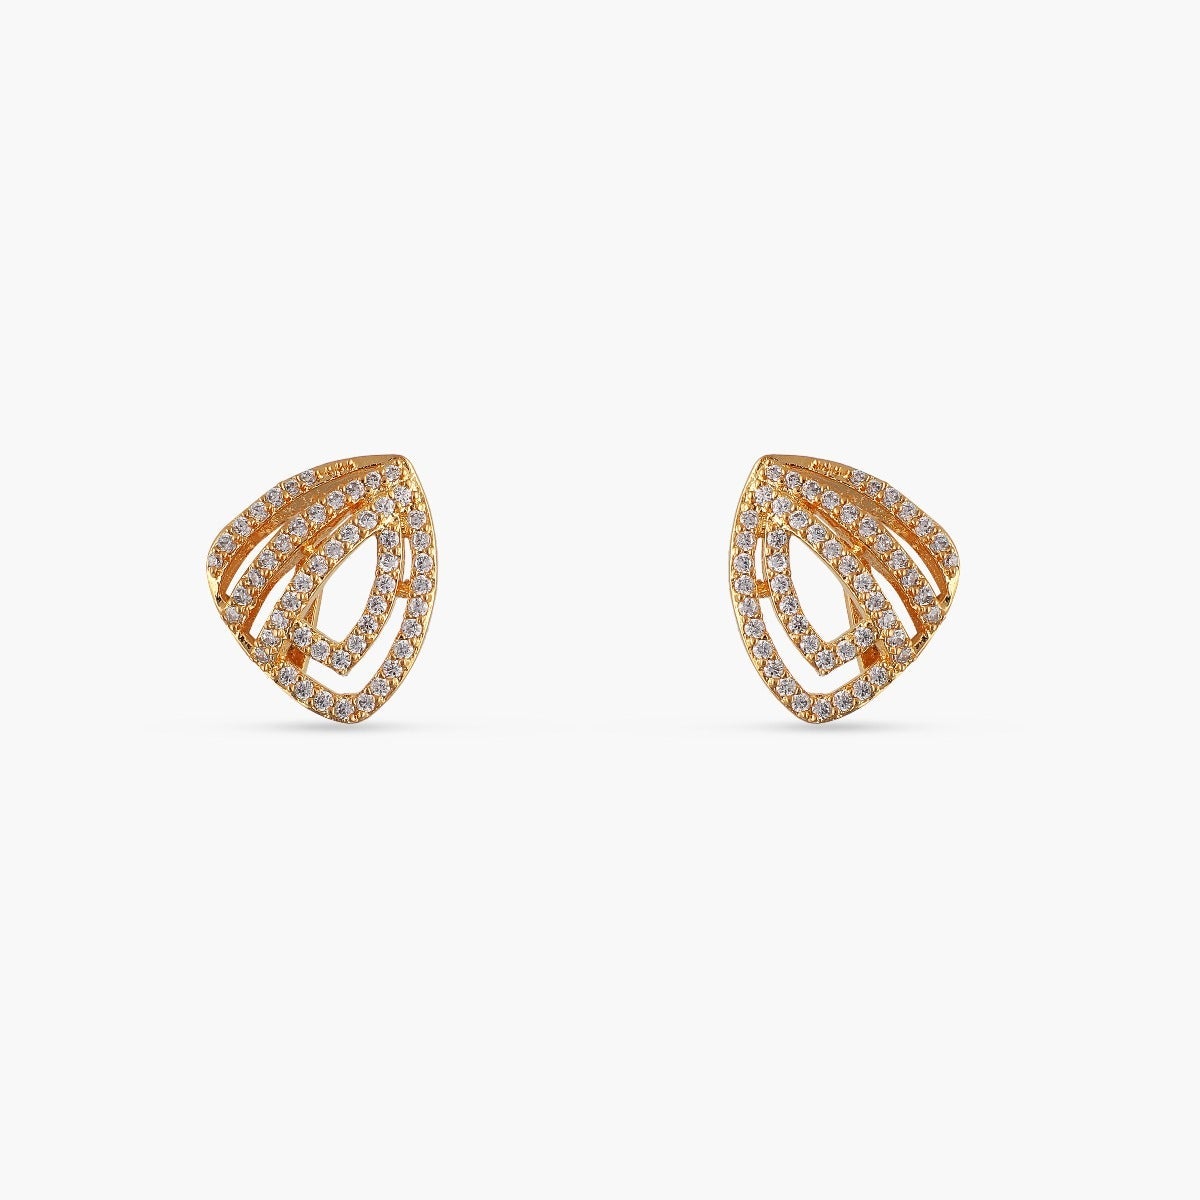 Vintage 18kt gold earrings traditional handmade gold jewelry hoop earrings  | eBay